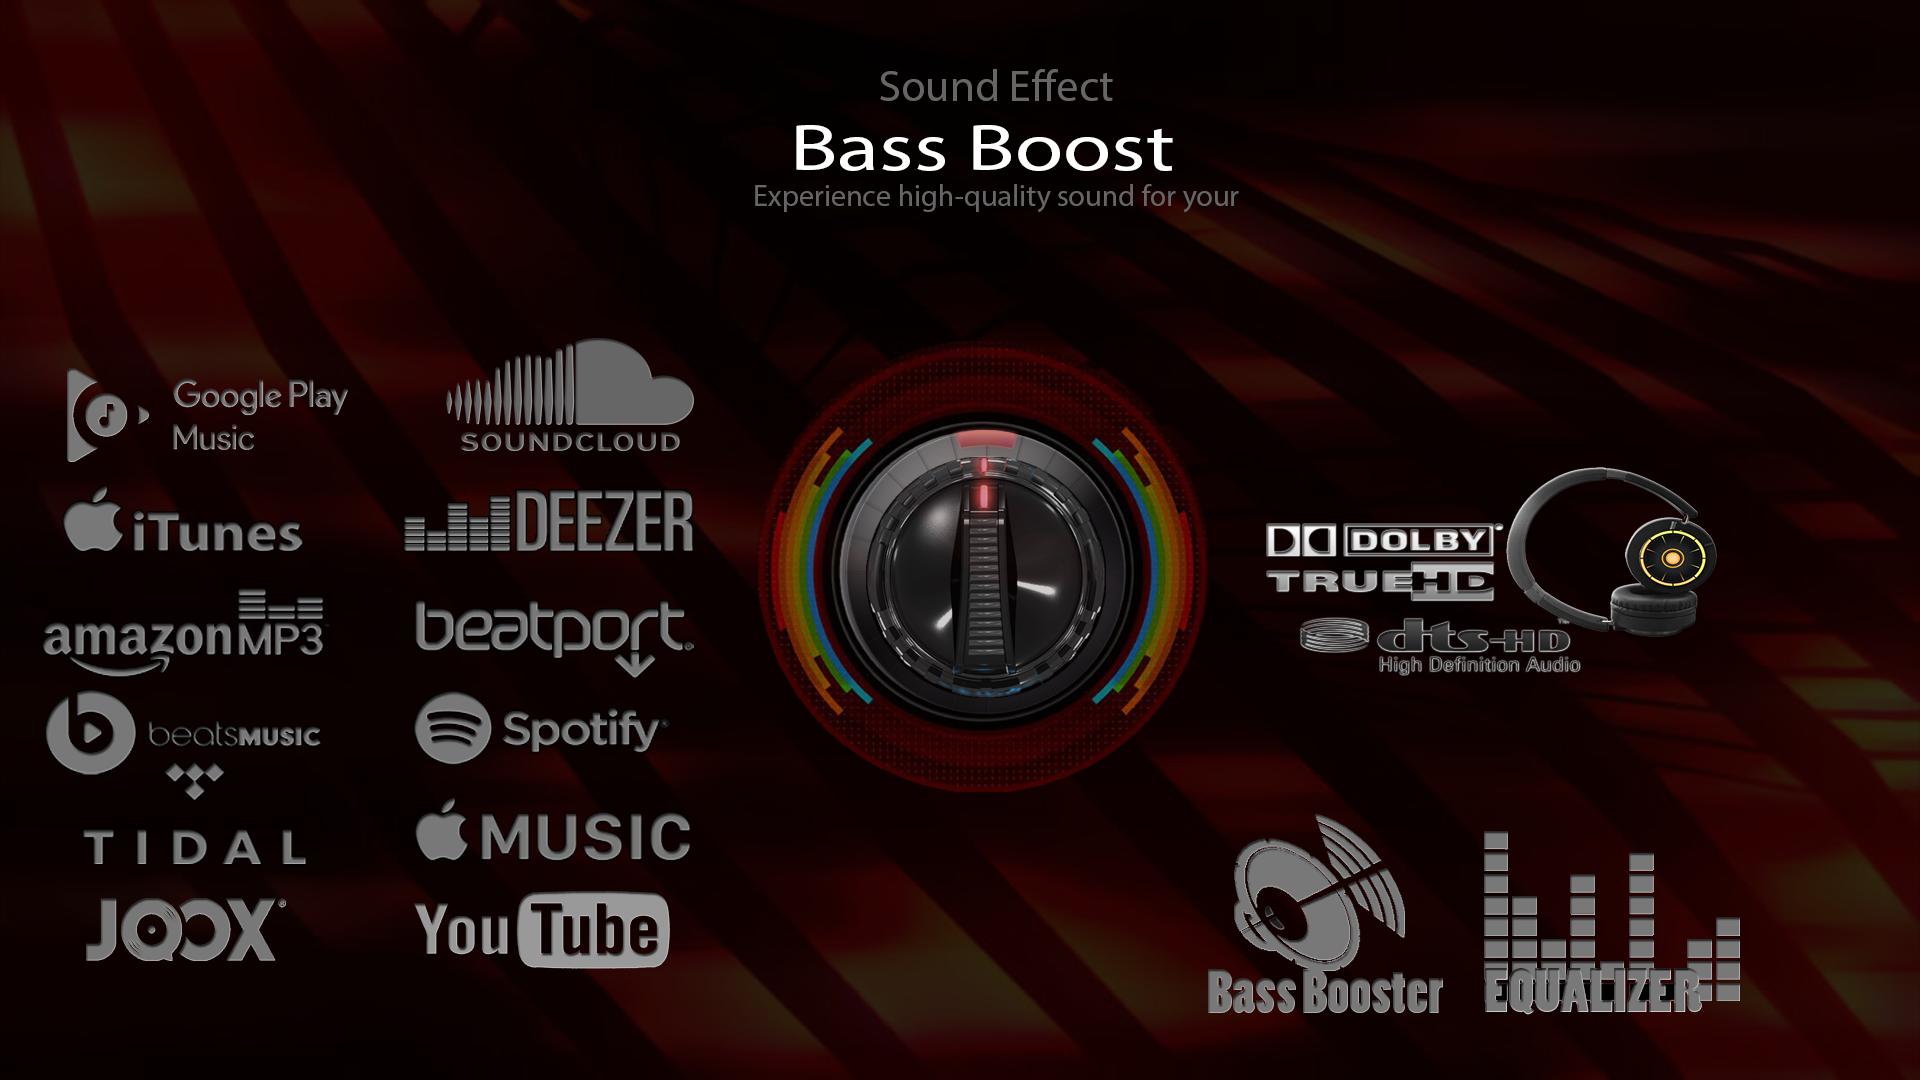 Effects test. Bass Booster. Bass Boost EQ. Бас буст виндовс 7. EQ Boost басс.